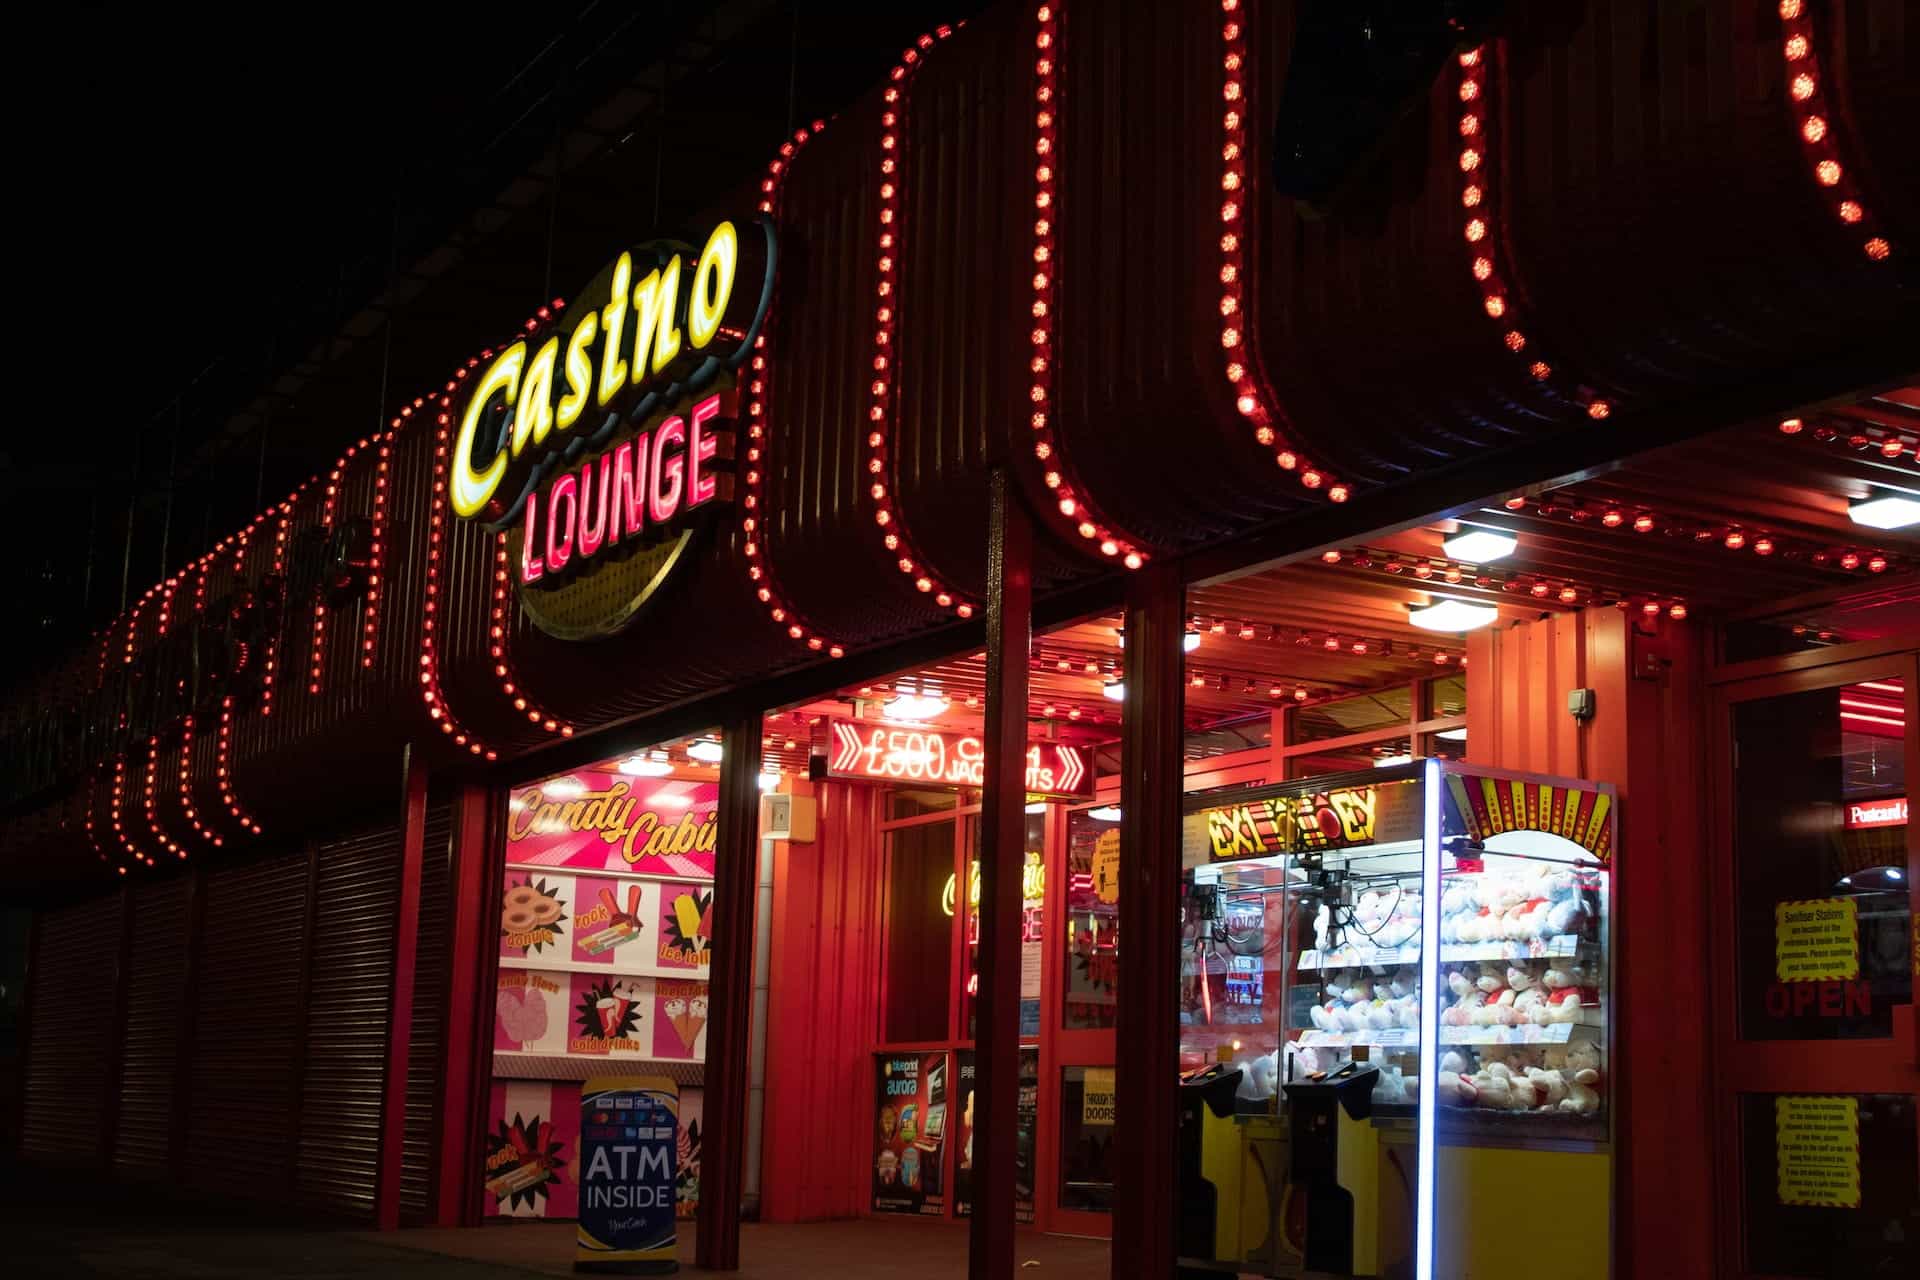 Tanda neon menunjukkan lokasi kasino.